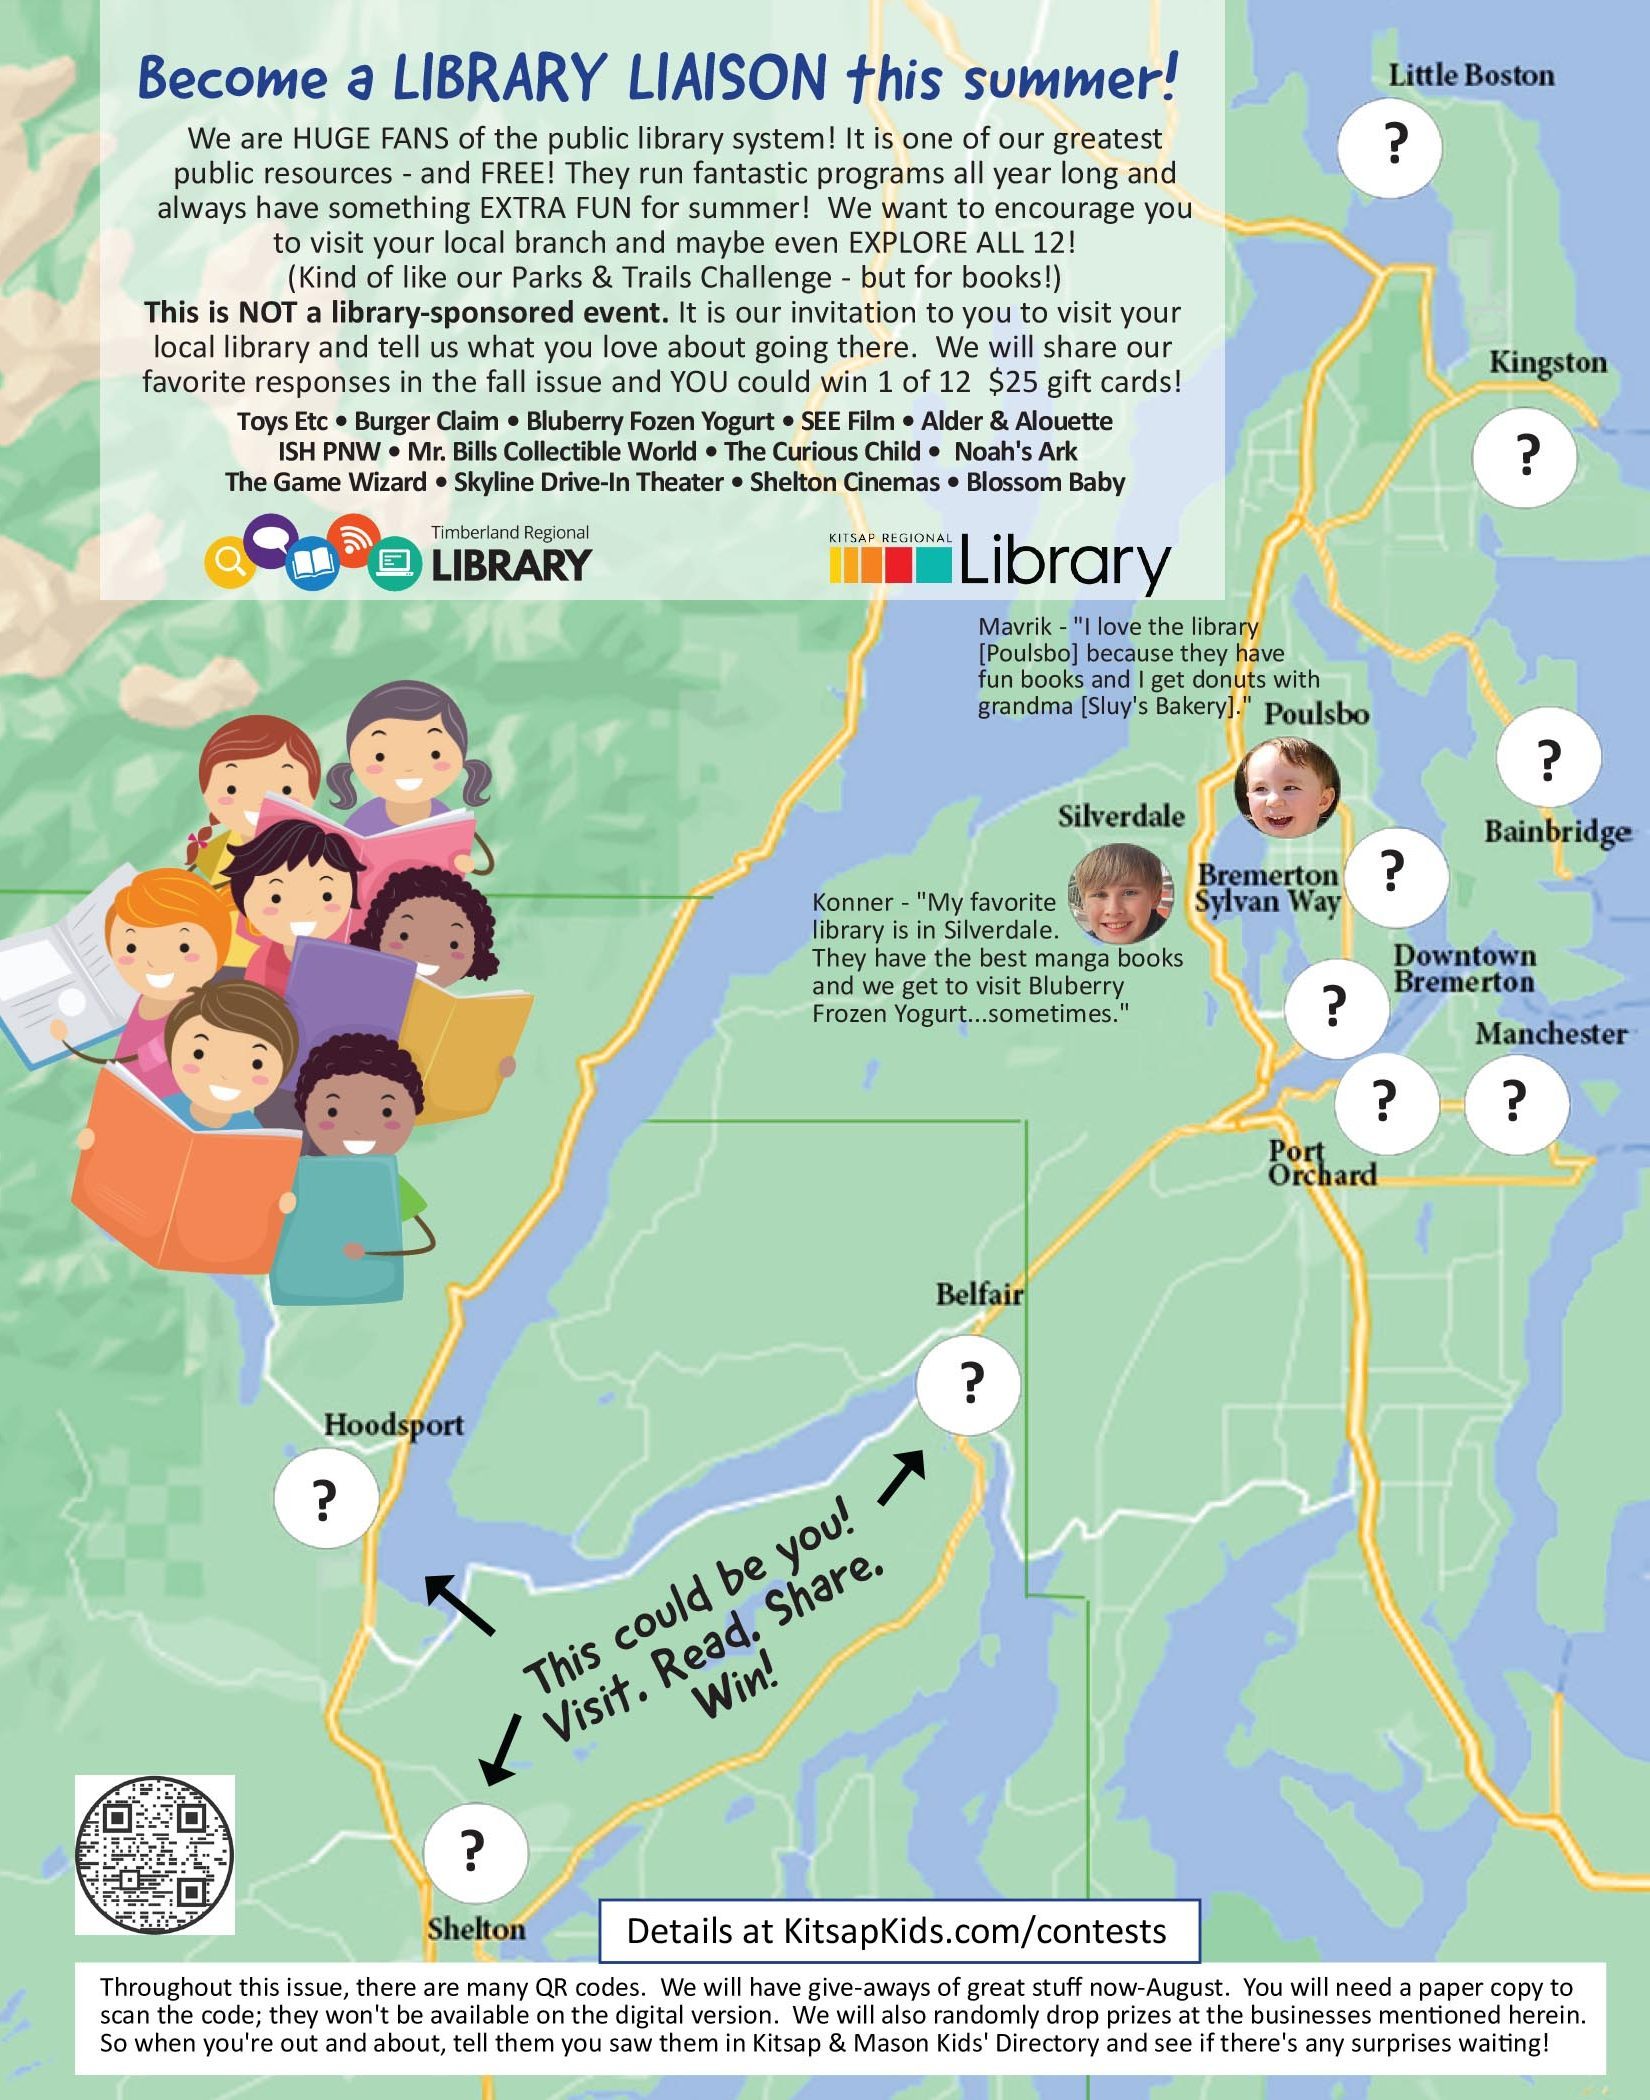 Kitsap & Mason Kids' Directory Library Liaisons Program for Kitsap Regional Library and Timberland Regional Library (Mason Co. branches only) - Spring/Summer 2022